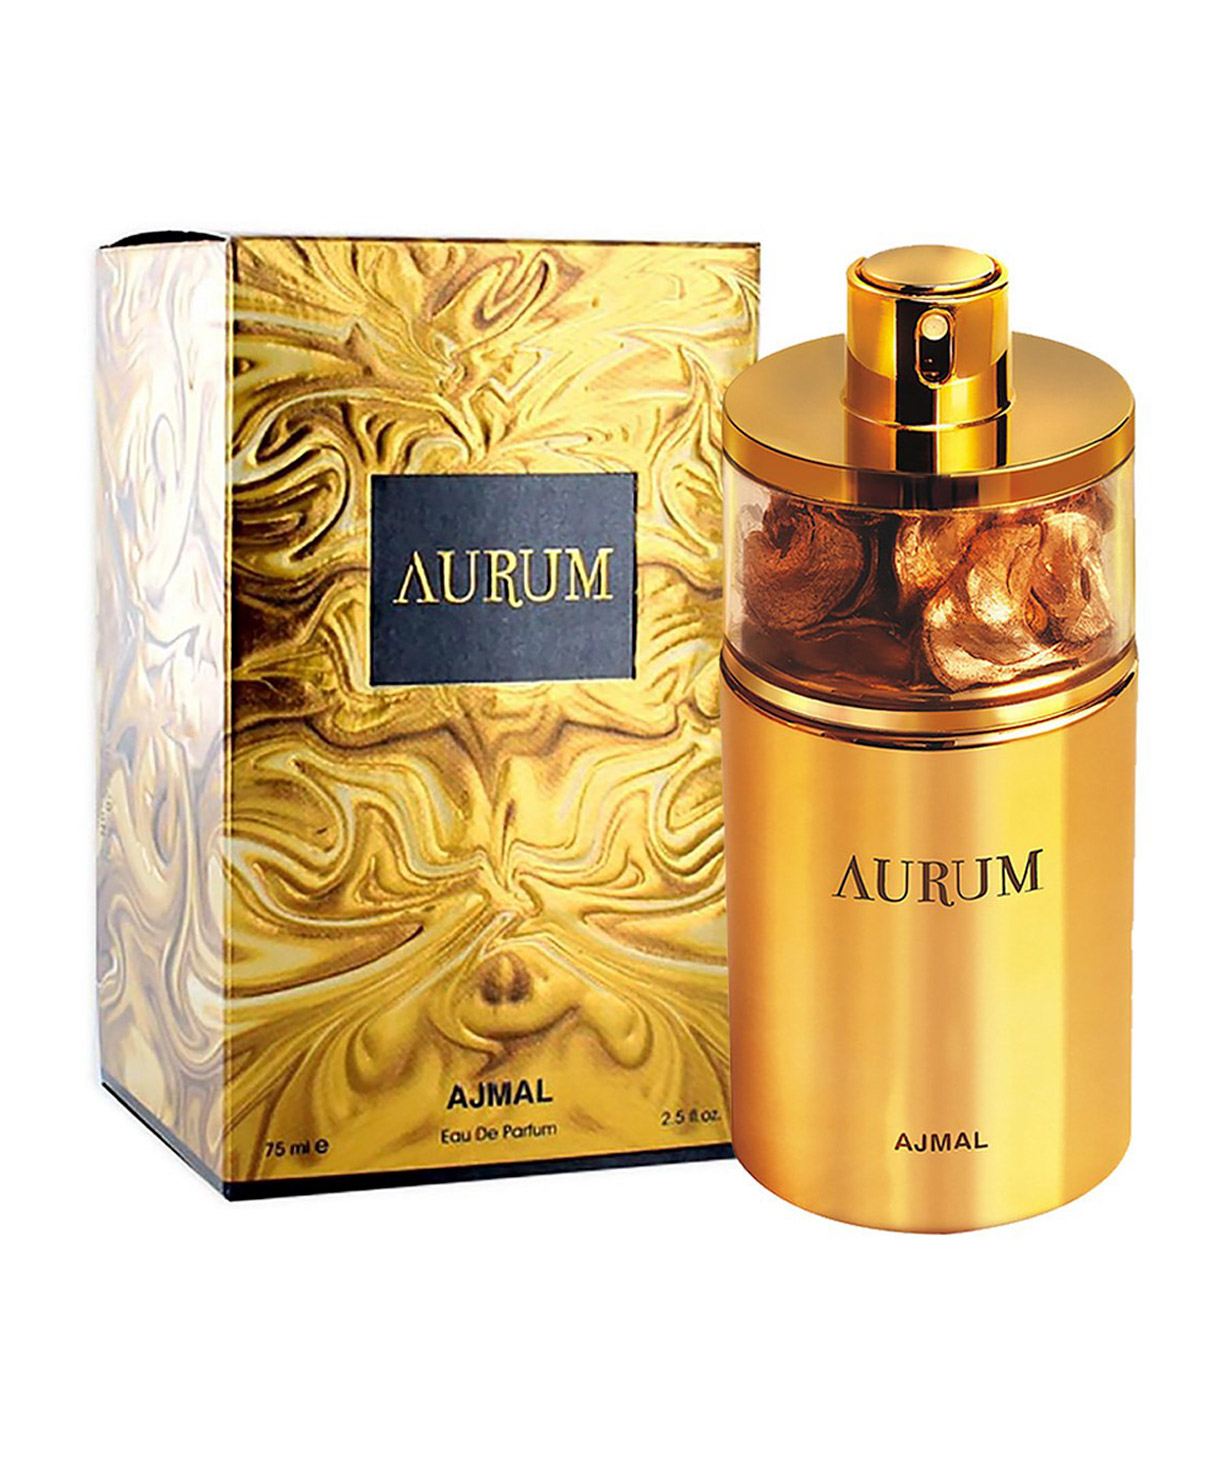 Օծանելիք «Ajmal Aurum» Eau De Parfum կանացի